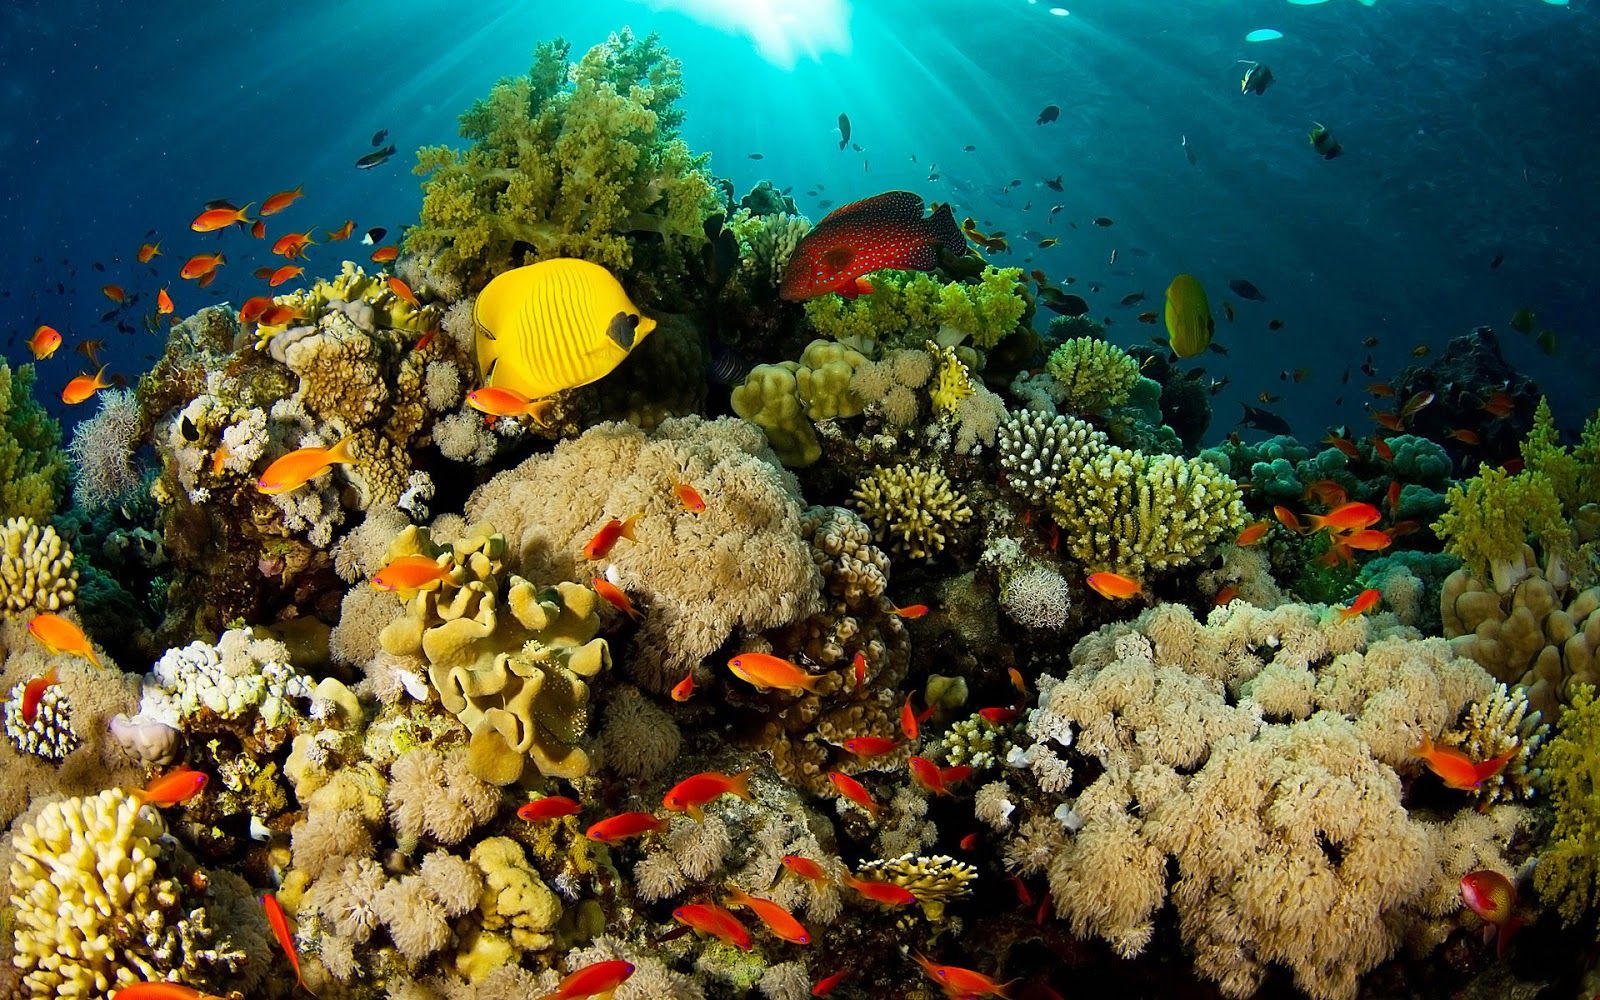 Coral Reef Desktop Background. Great Barrier Reef Wallpaper, Coral Reef Wallpaper and Tropical Reef Wallpaper